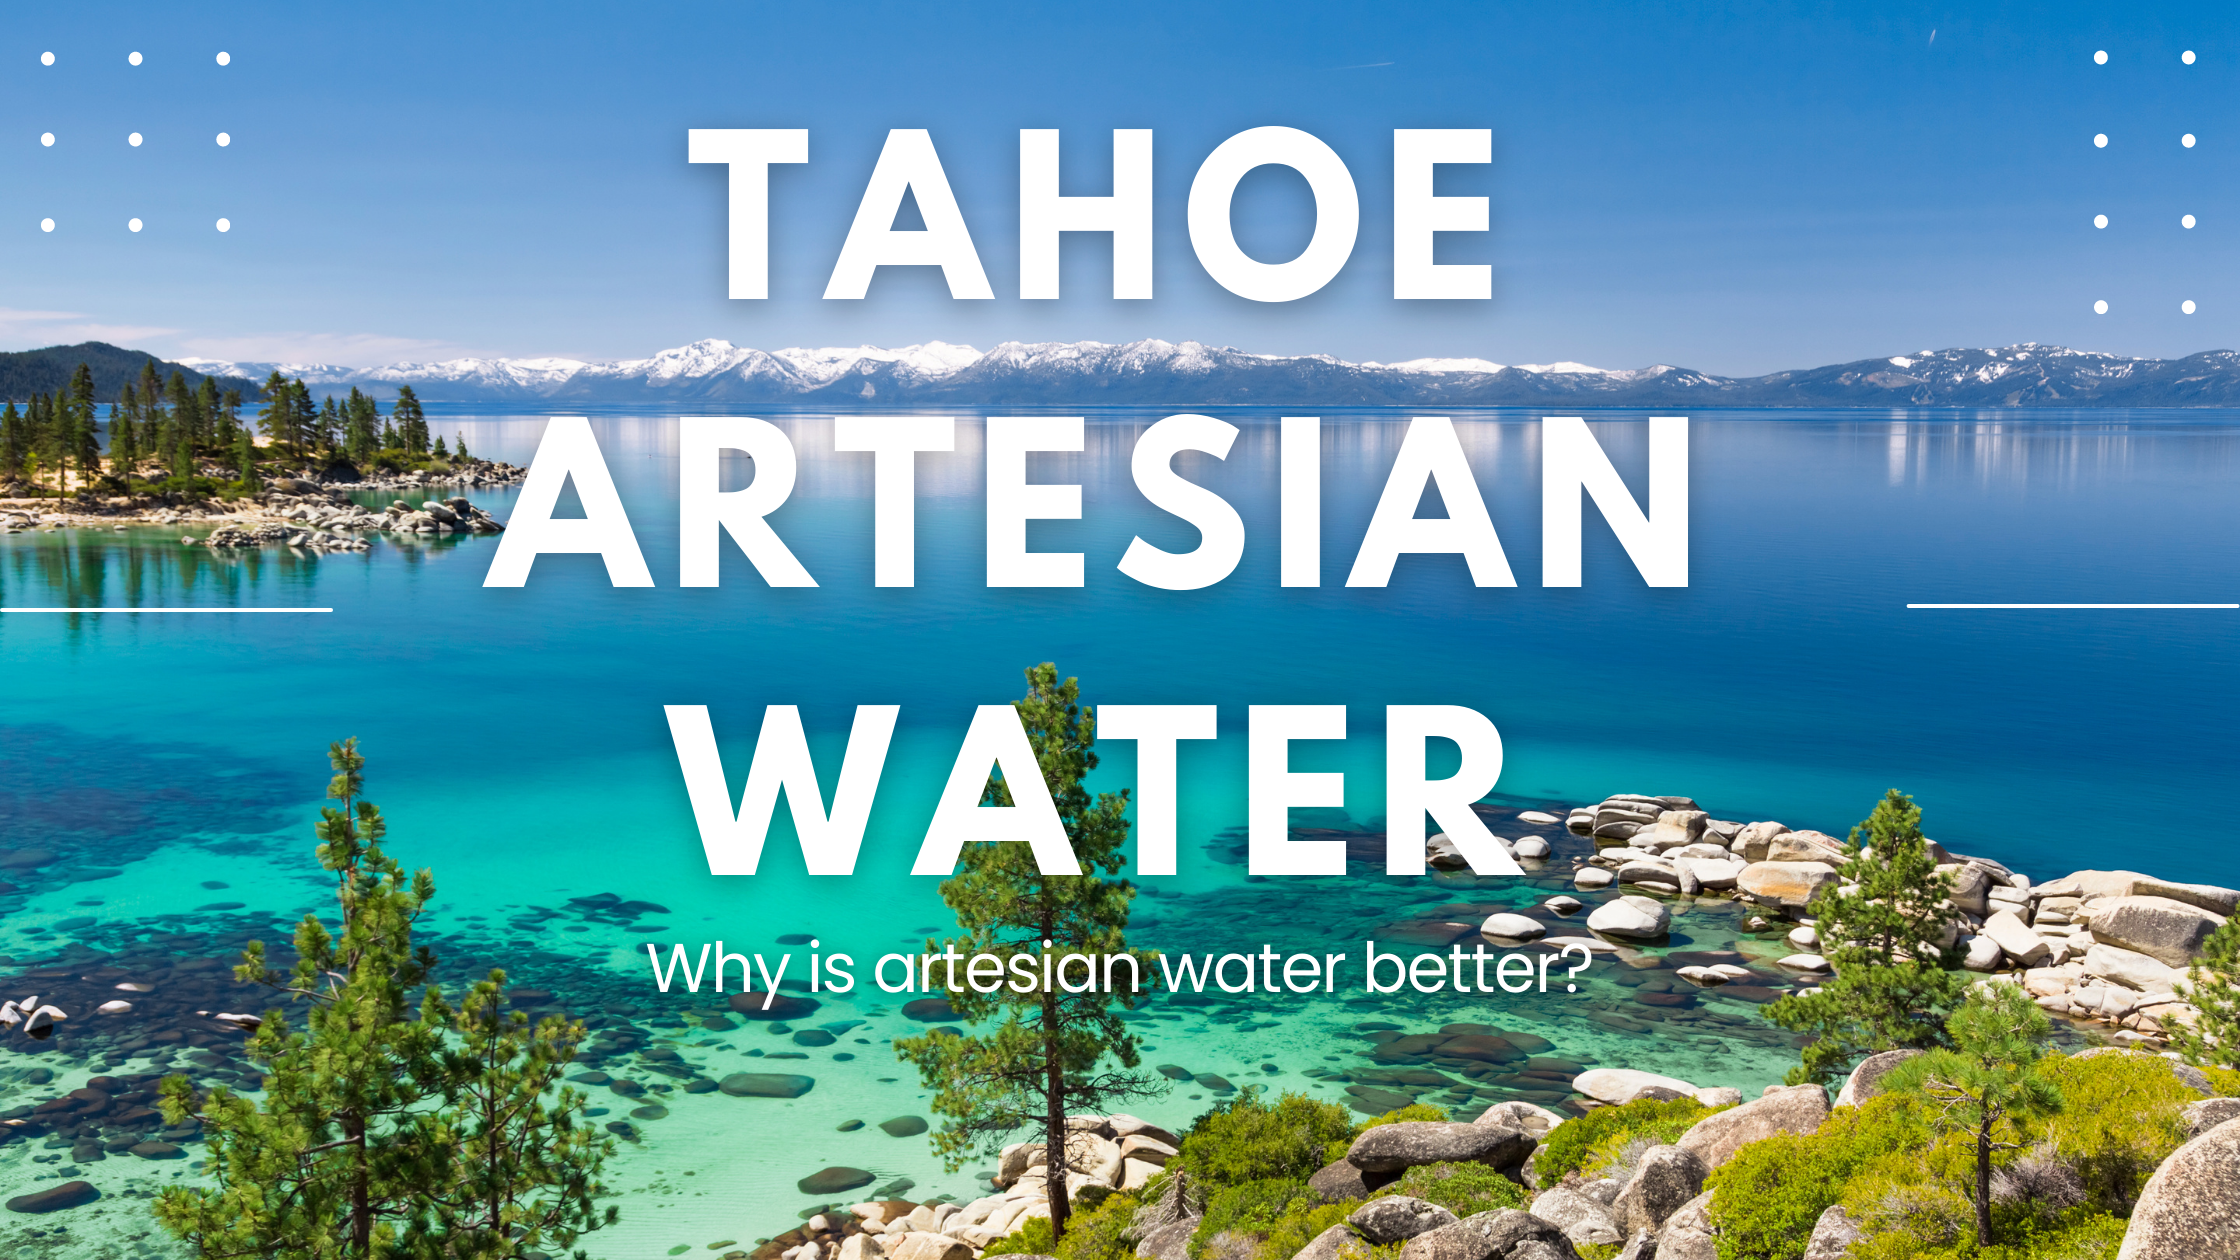 Tahoe Artesian Water: Why is Artesian Water Better?